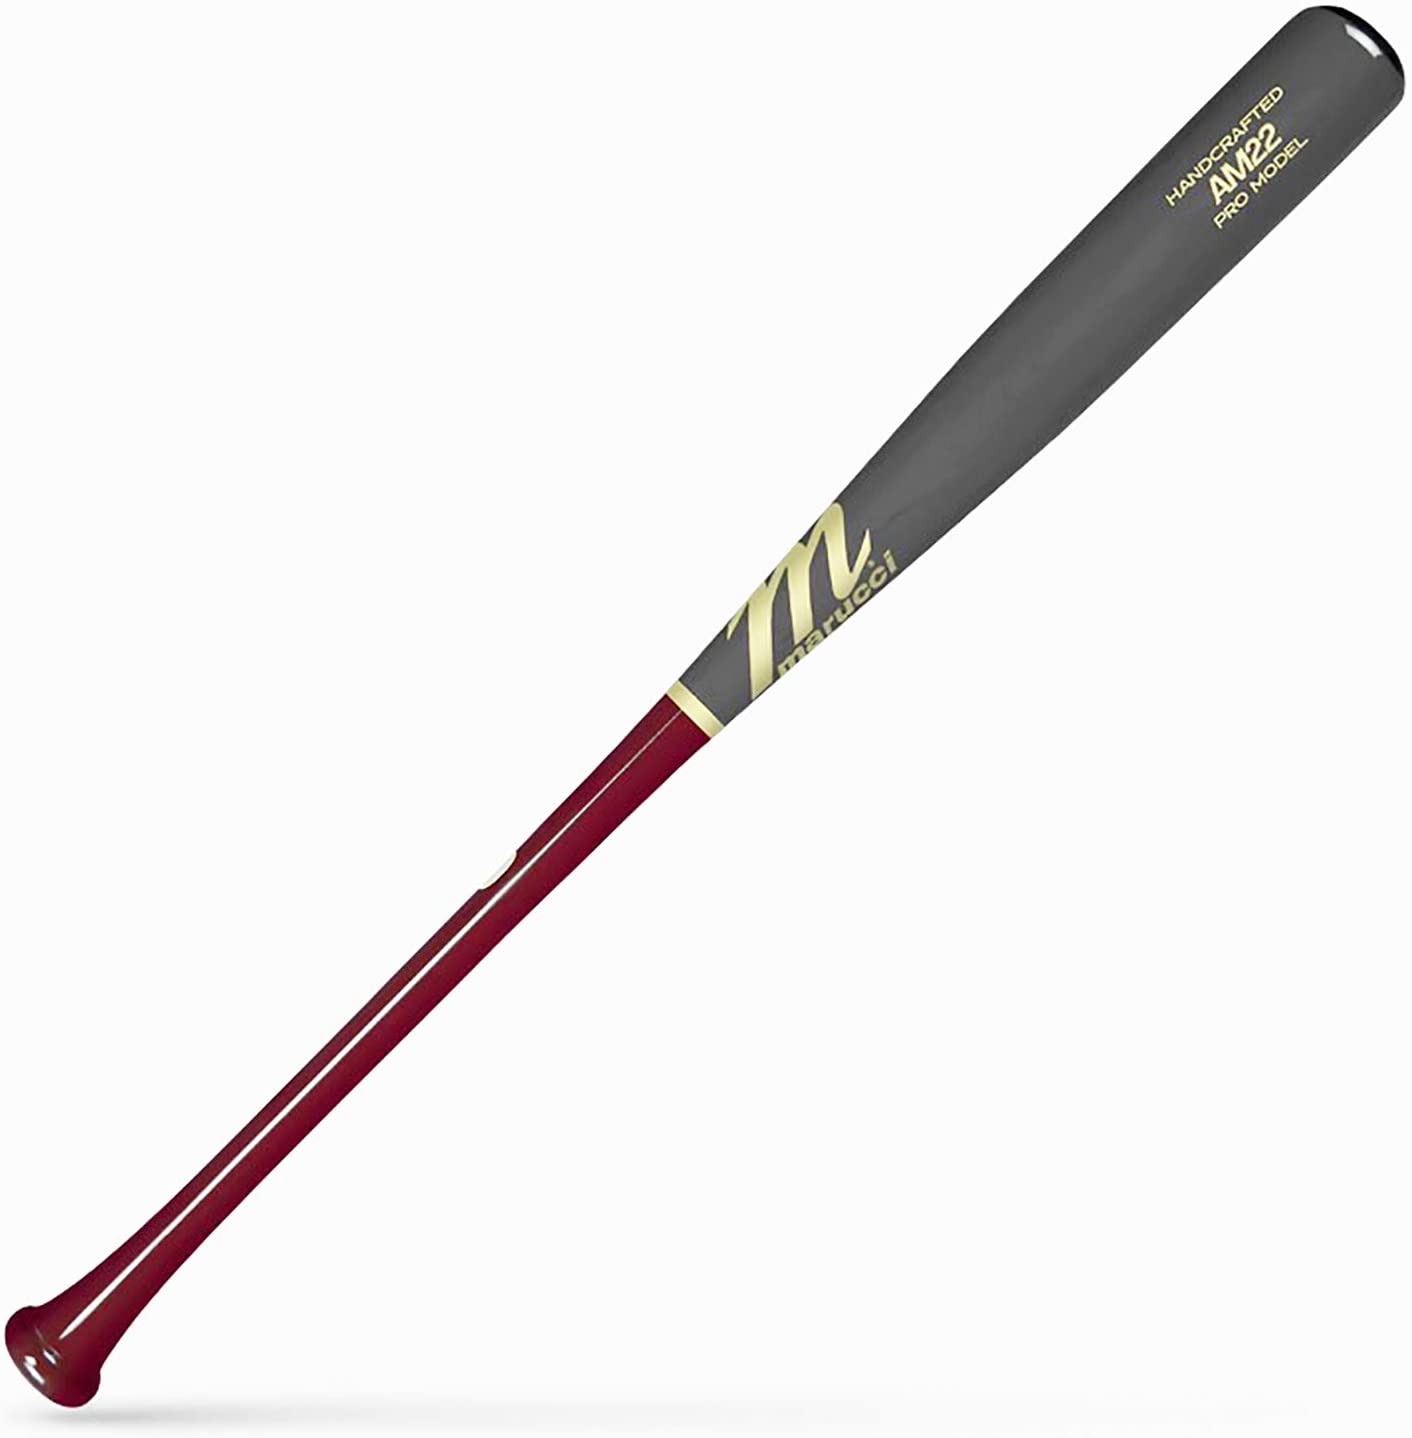 marucci-andrew-mccutchen-maple-wood-baseball-bat-cherry-fog-33-inch MVE2AM22C-CHFG-33 Marucci  <p>Hit for average Hit for power The AM22 Pro Model wood